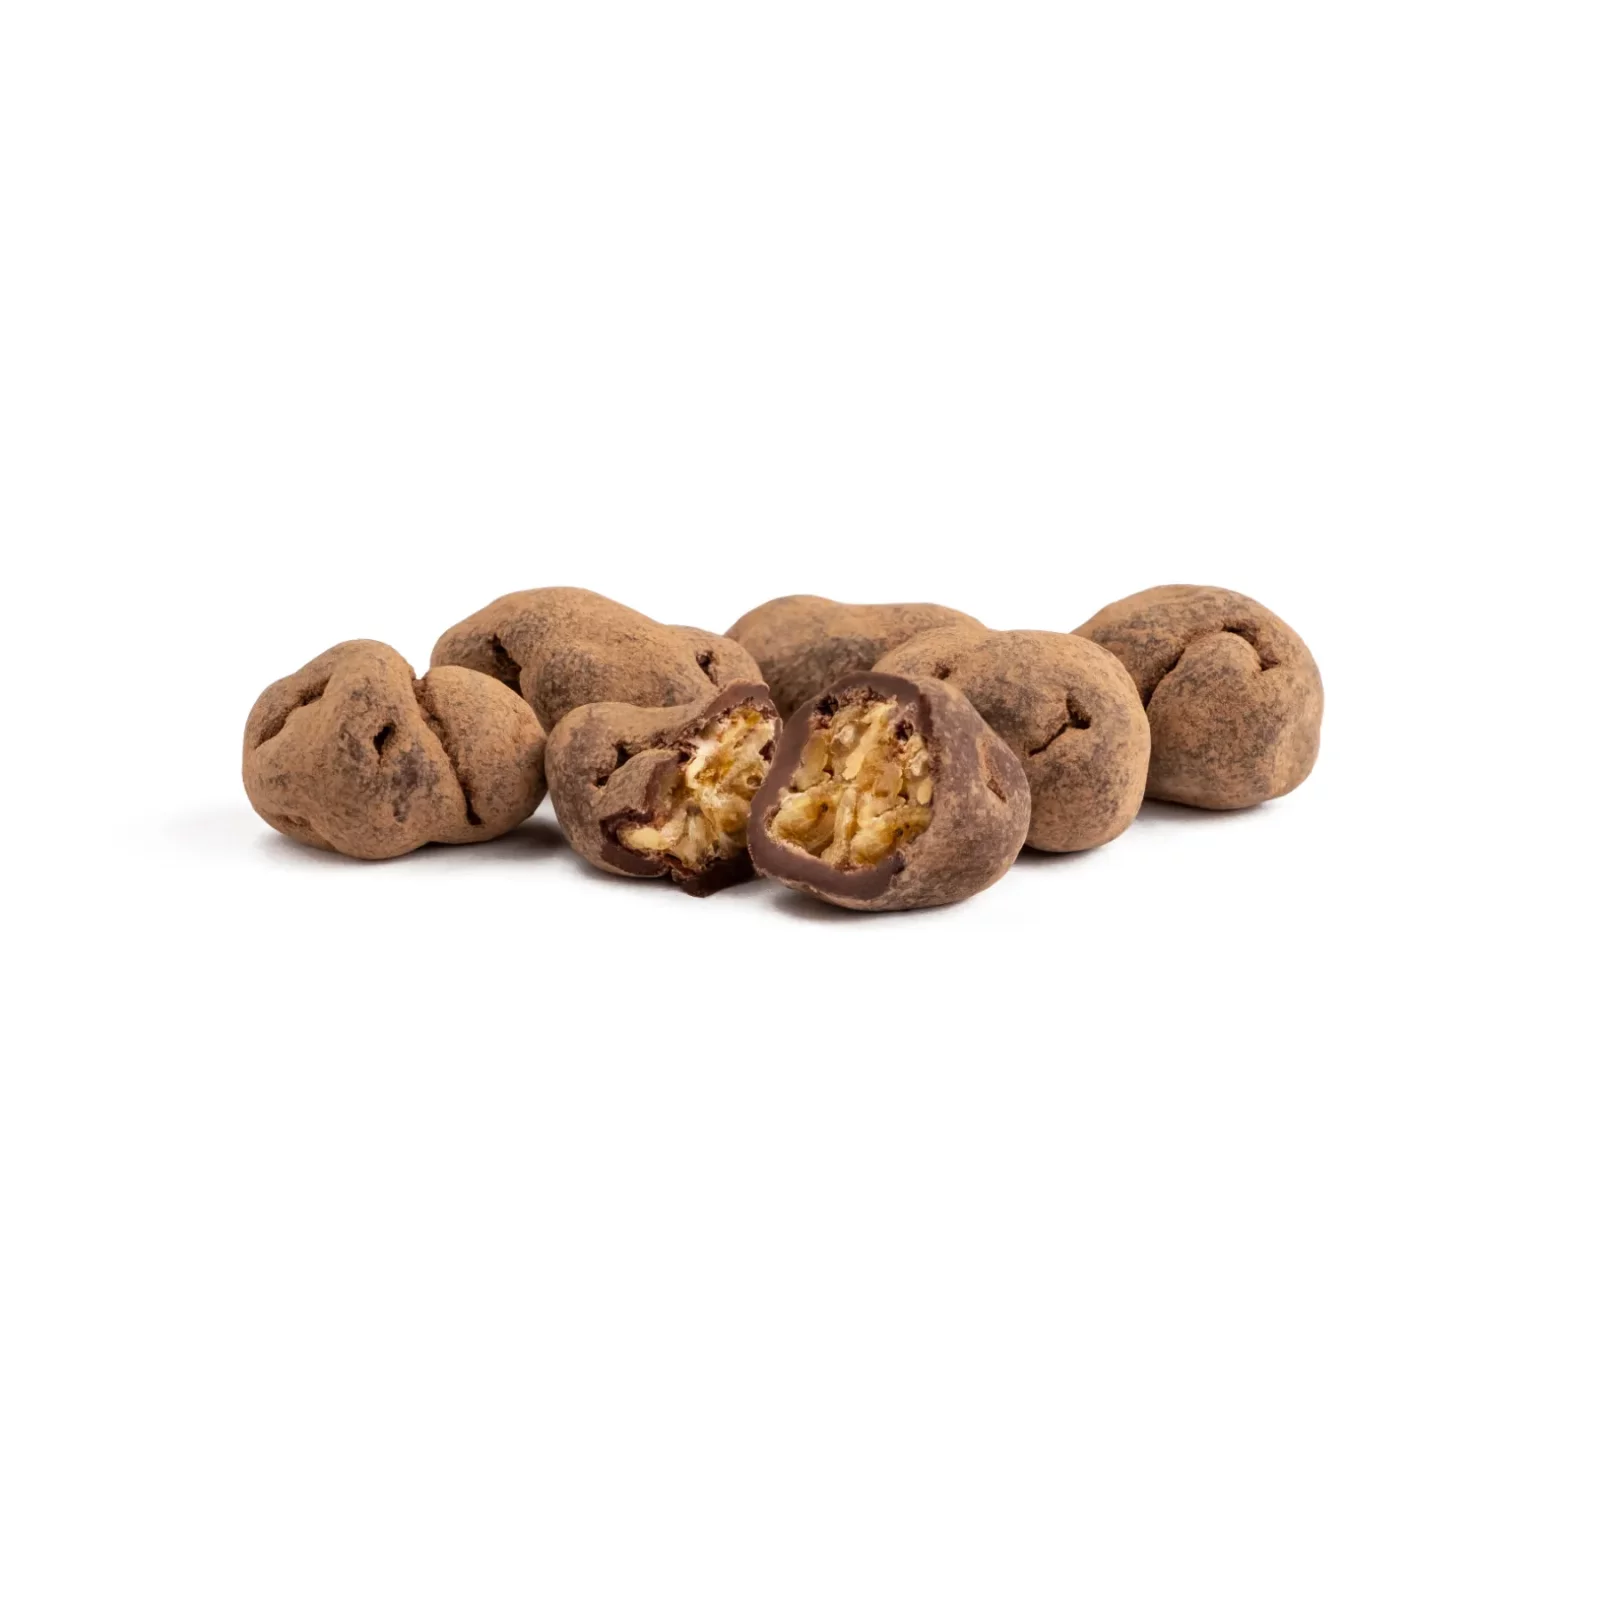 THE RAW CHOCOLATE COMPANY - Schokoladen-Maulbeer-Snackpack 28g 3